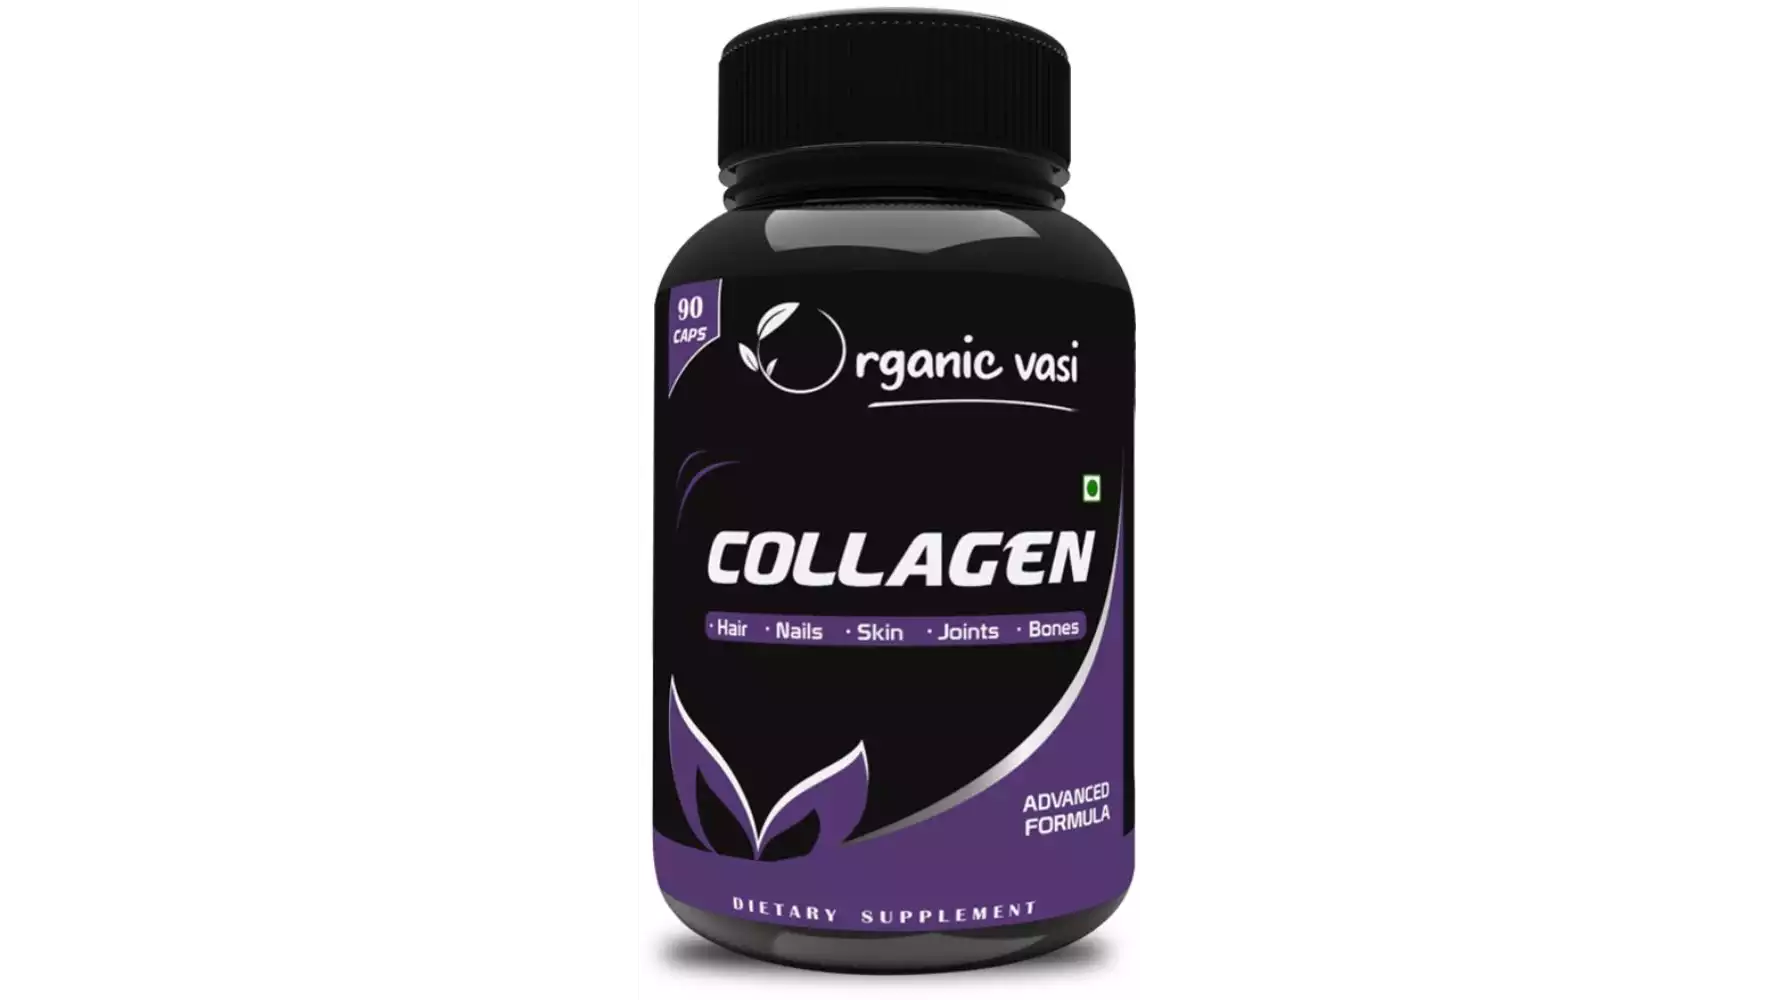 Organic Vasi Collagen 1000Mg Supplement (90caps)